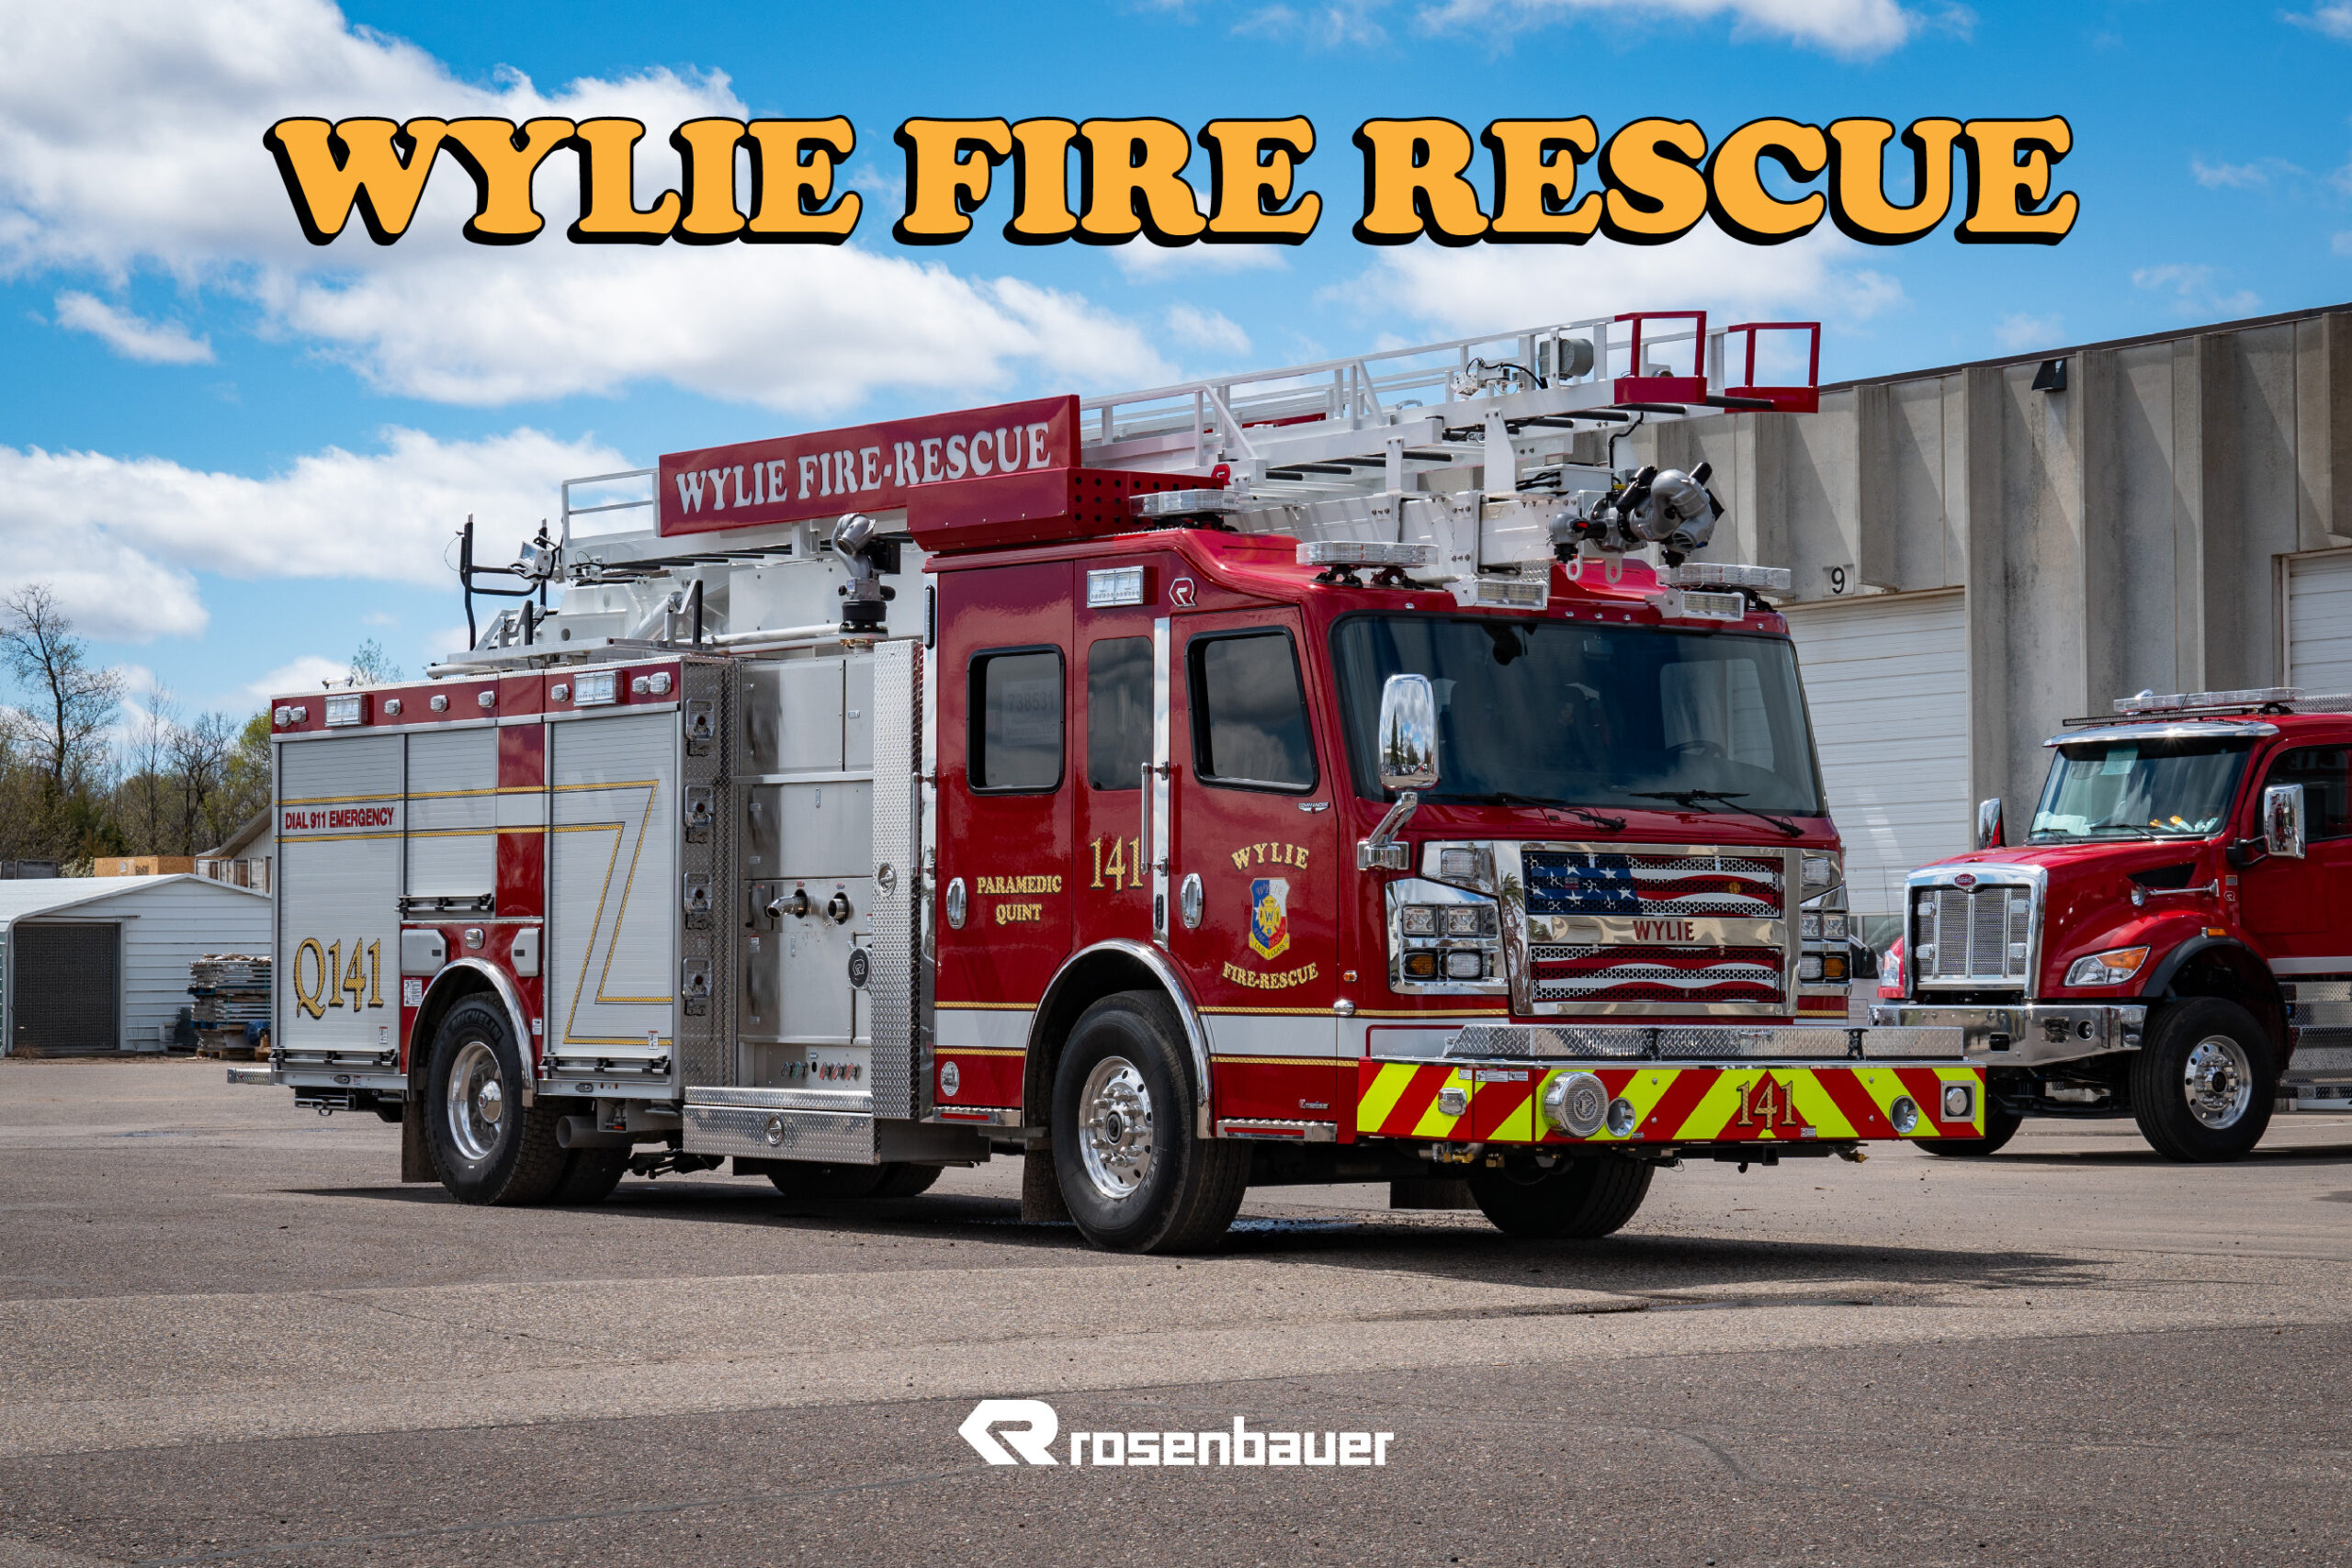 Wylie Fire Rescue Rosenbauer Roadrunner Elevated Water Tower